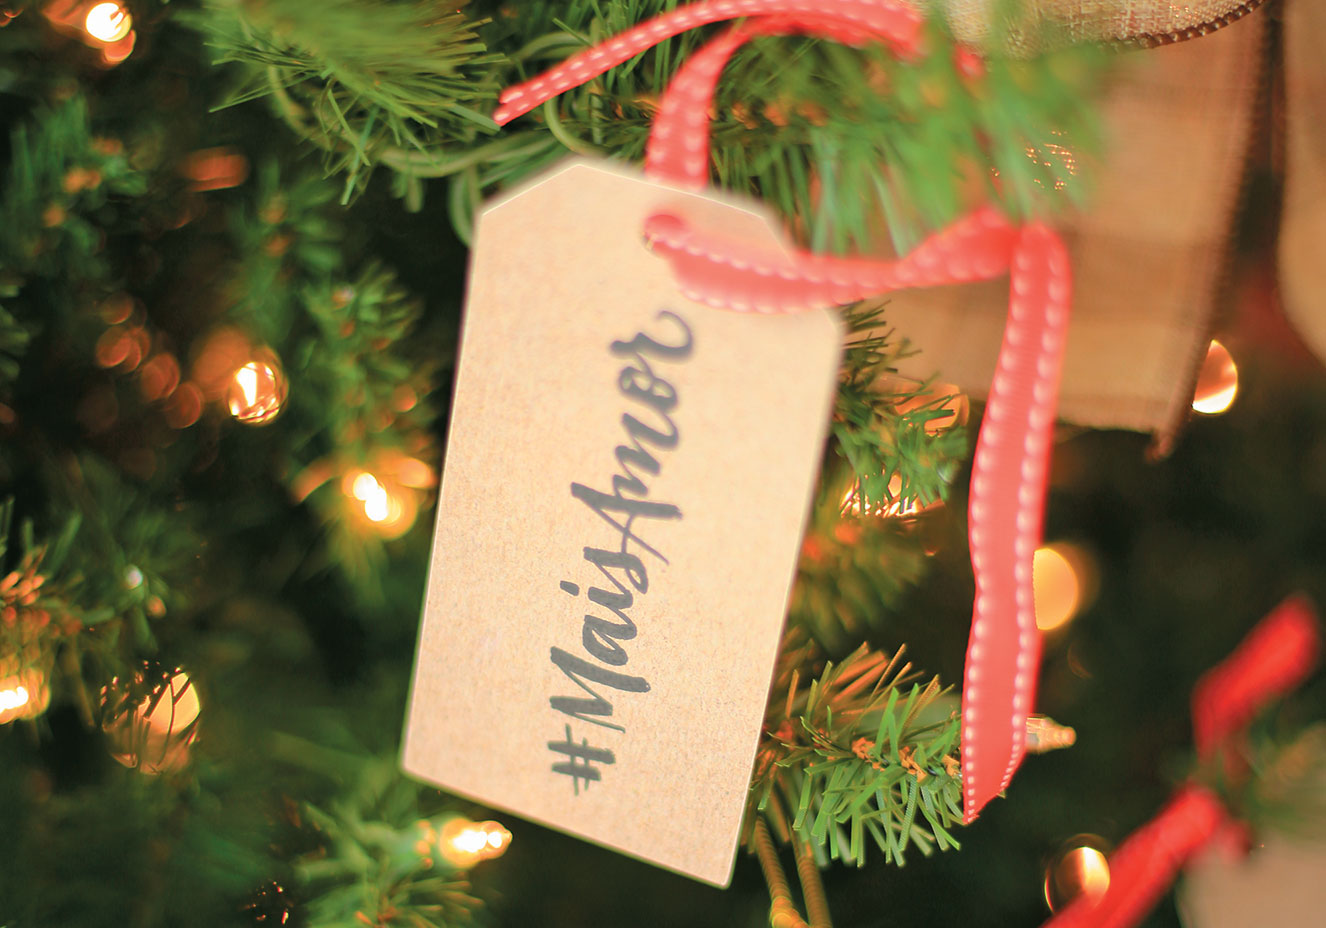 Especial Natal: faça download de tags para decorar sua árvore | CLAUDIA